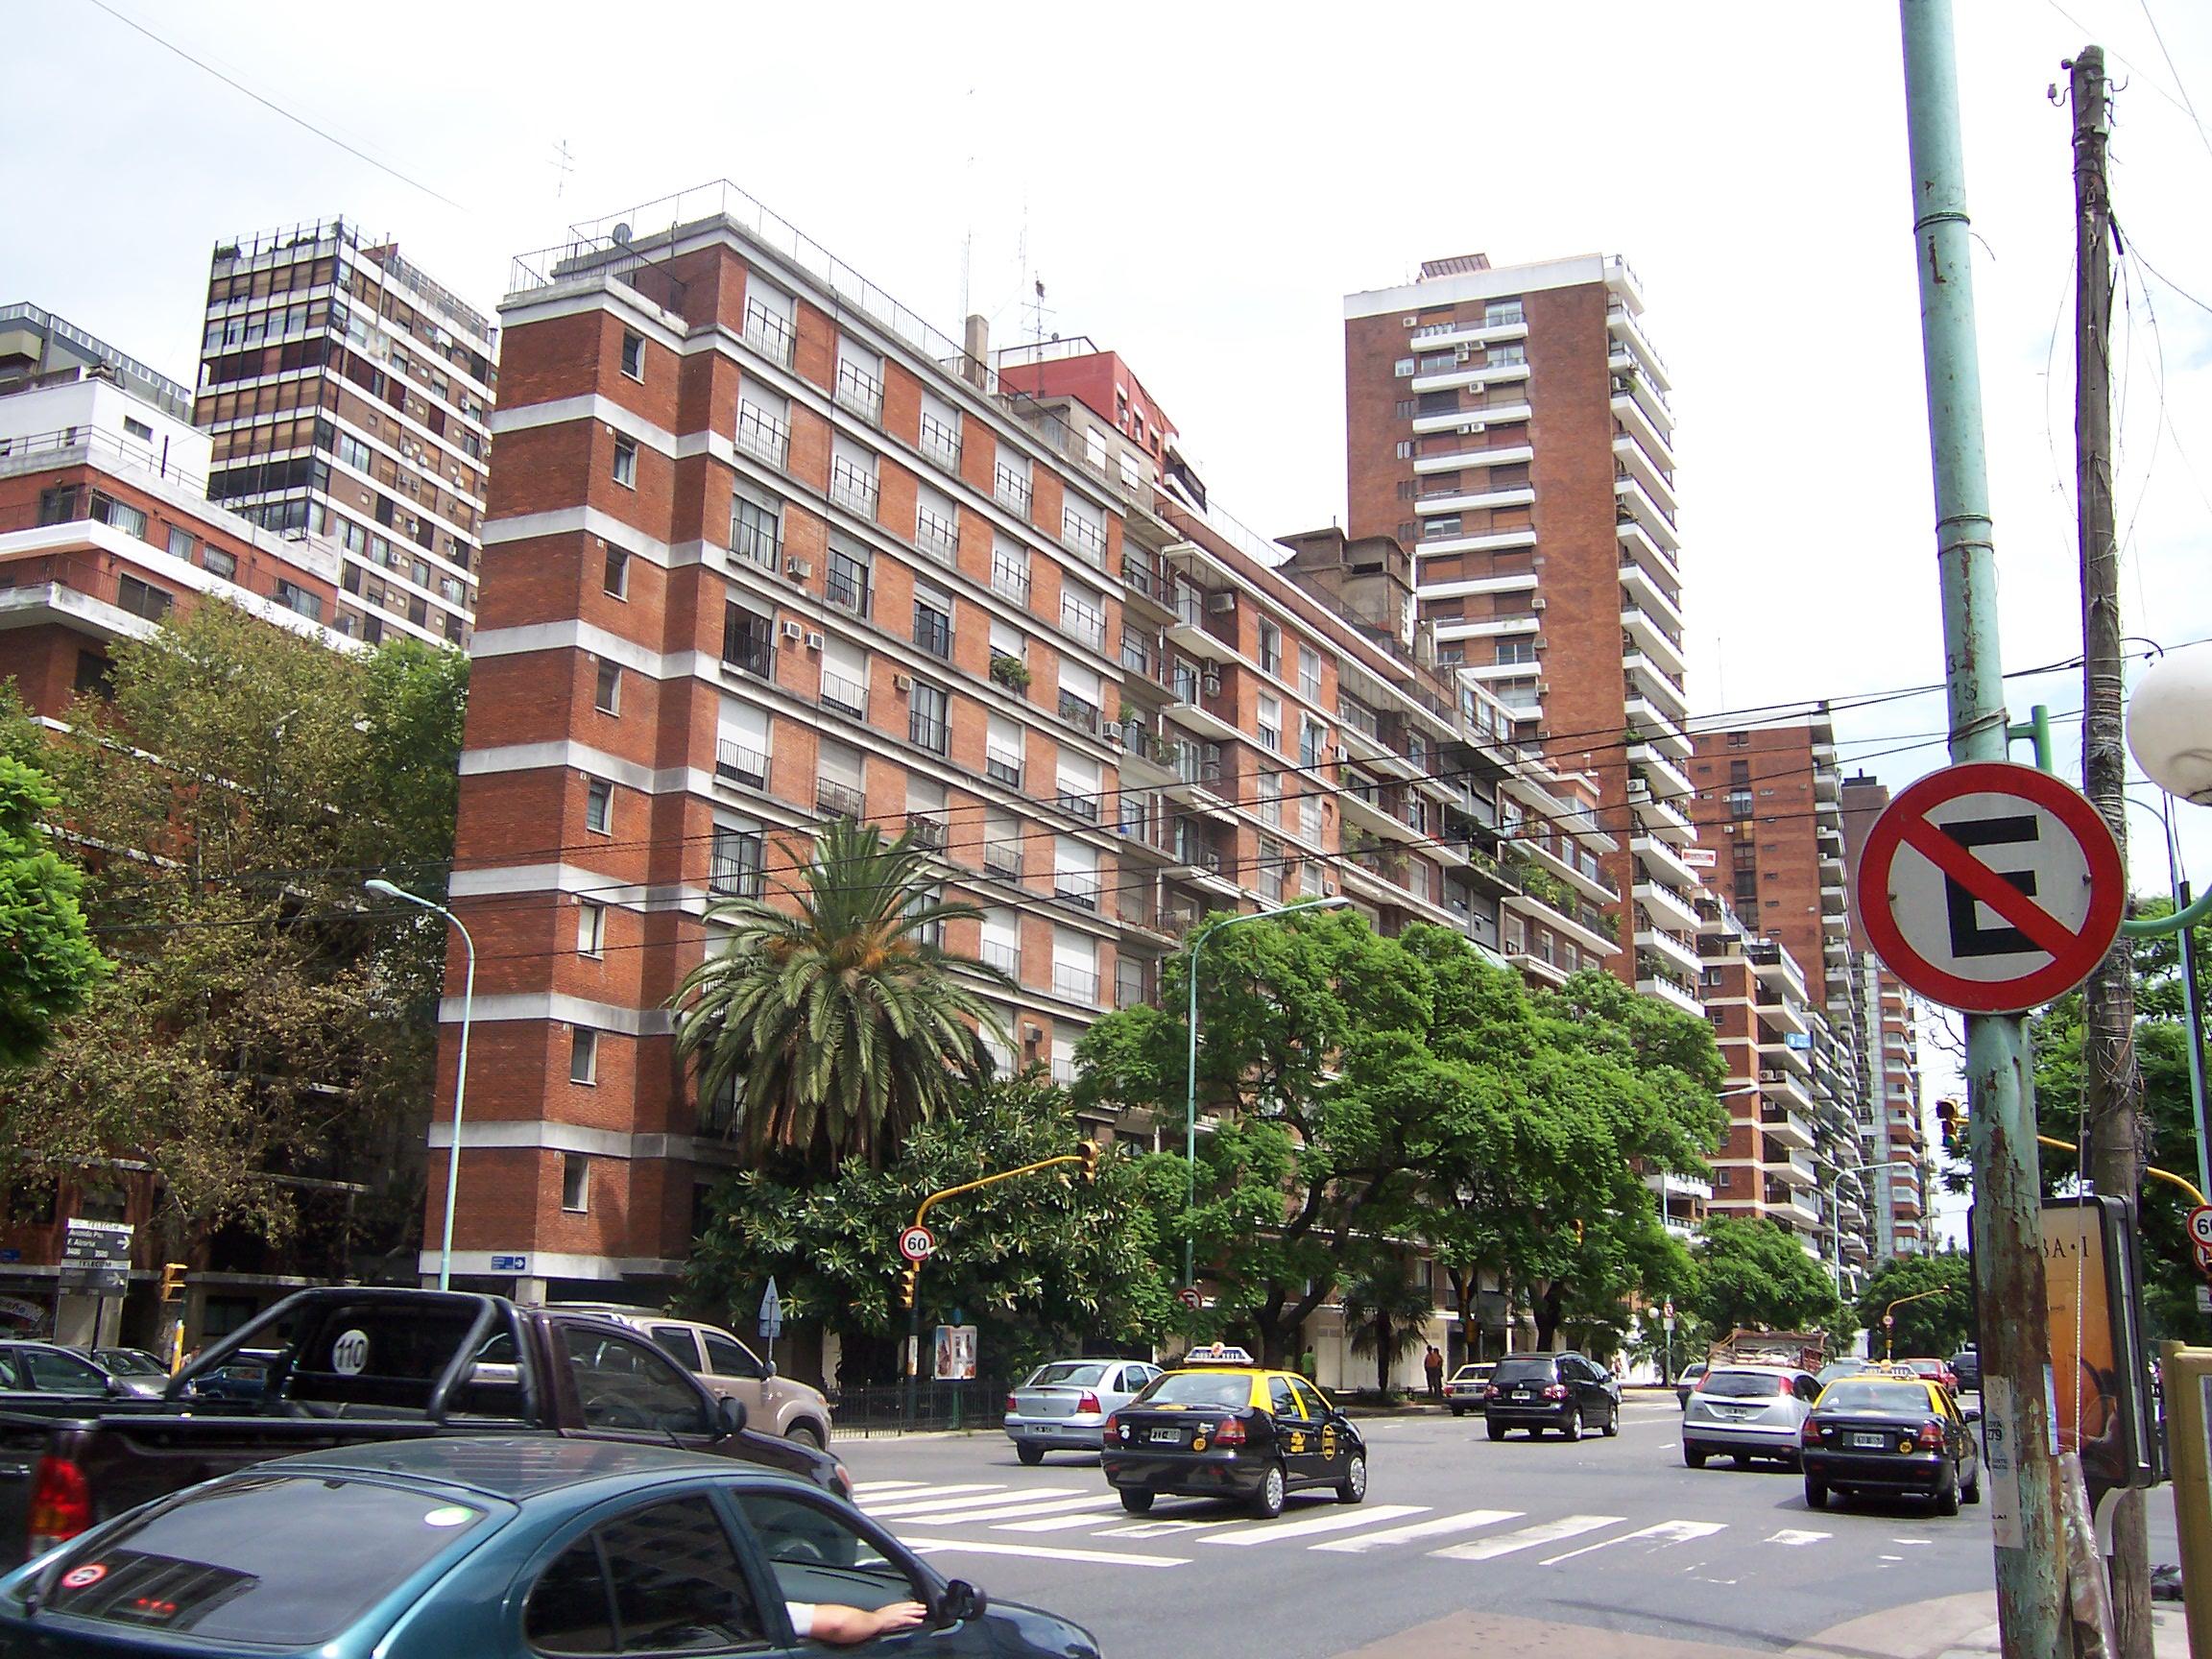 Palermo apartments